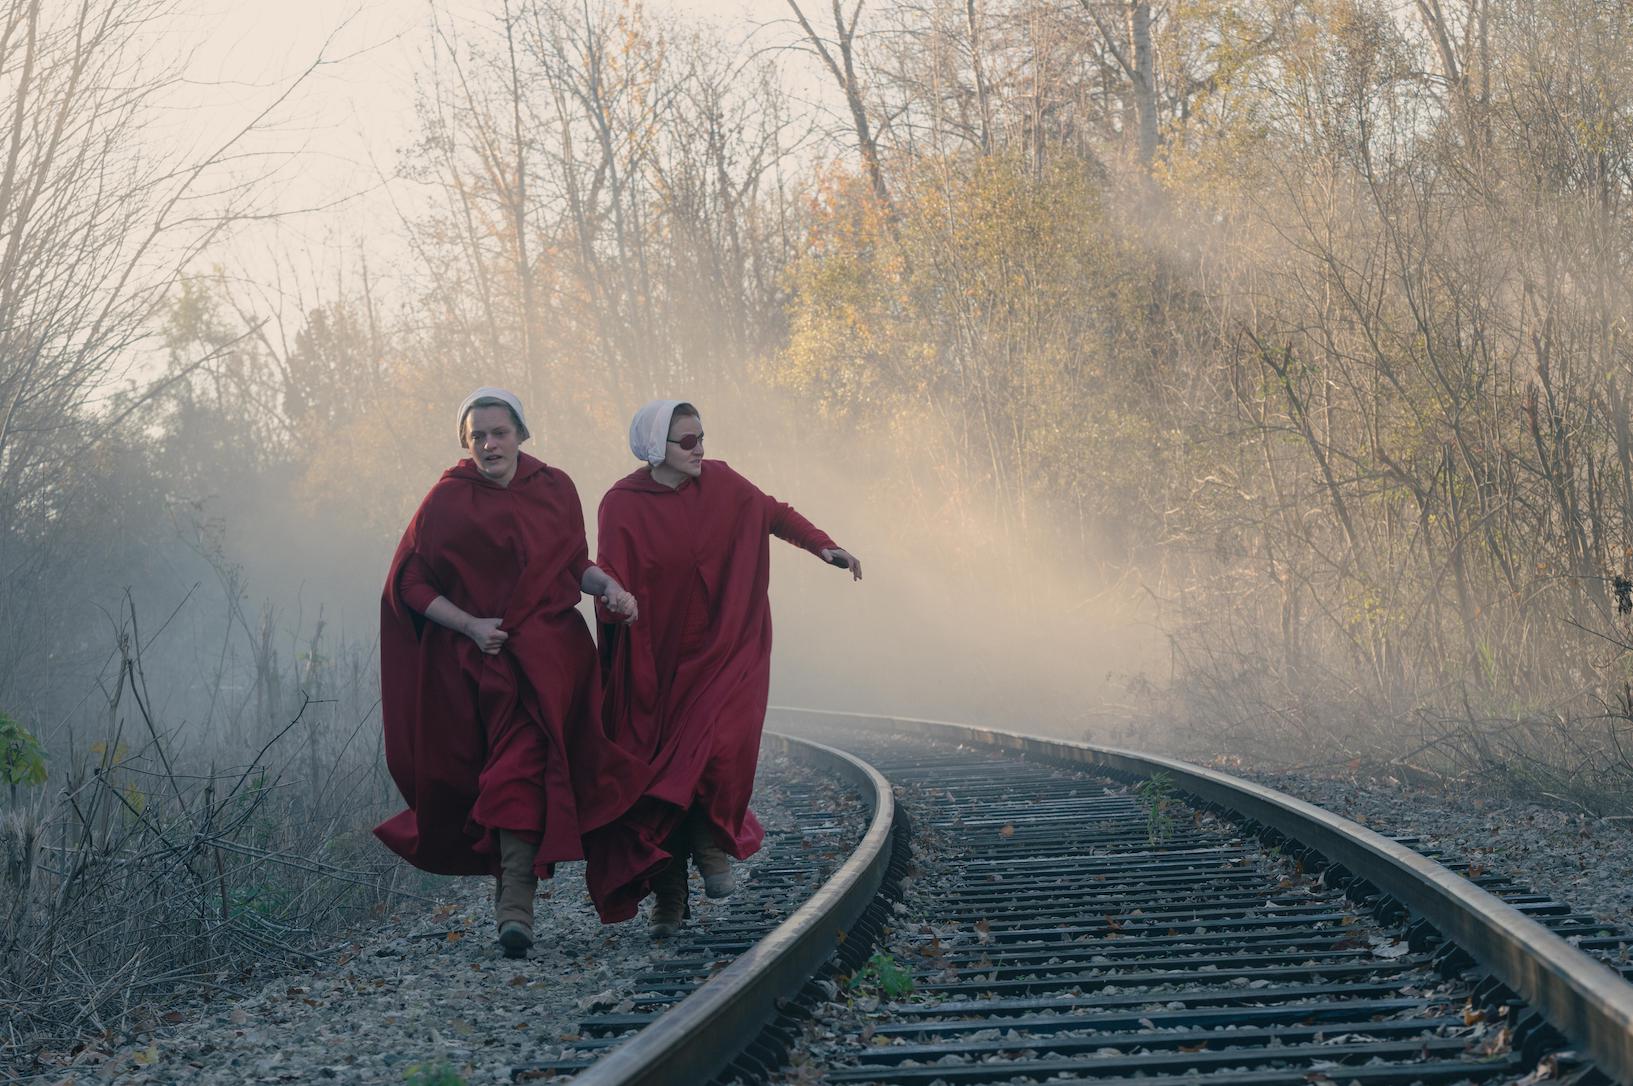 June and Janine running along train tracks in 'The Handmaid's Tale' Season 4